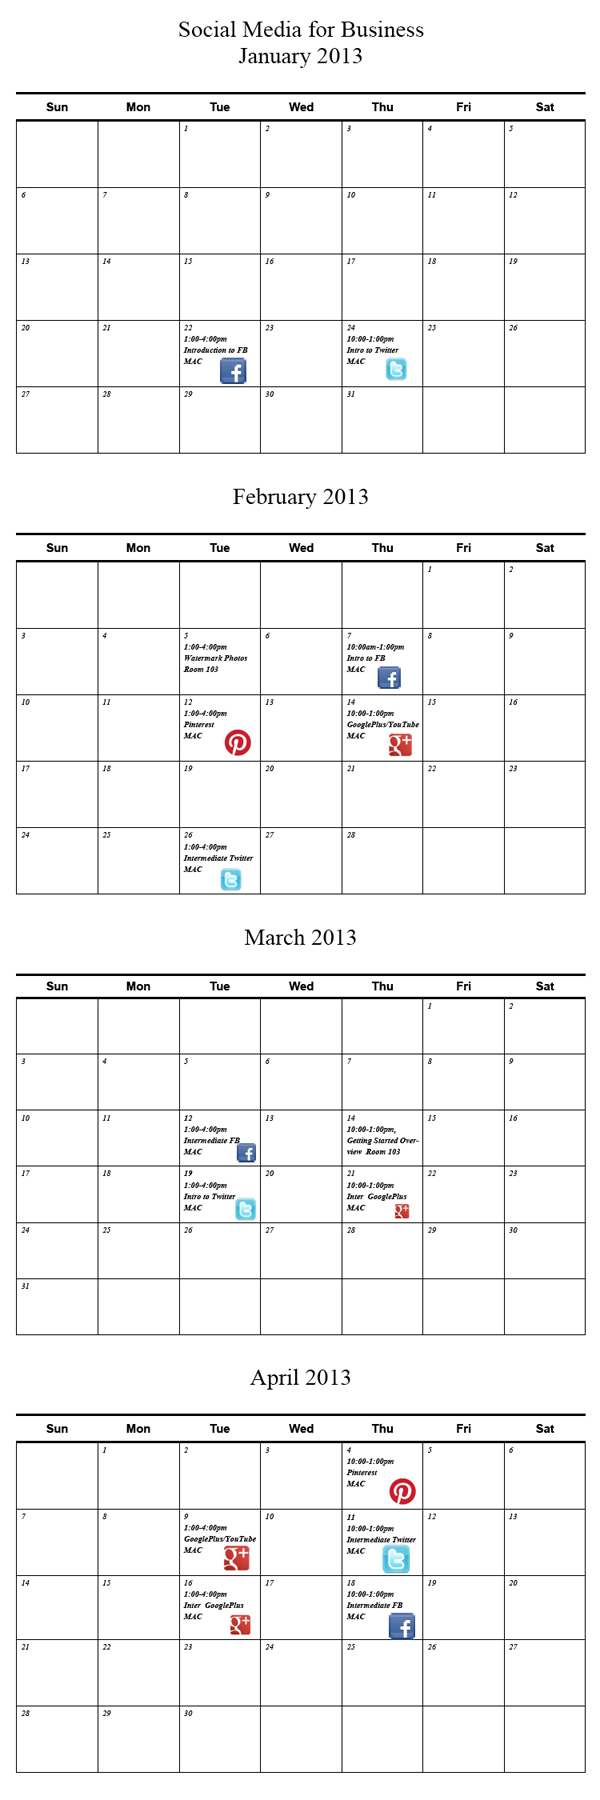 Calendar for Jan - April Linda Sherman Social Media for Biz classes